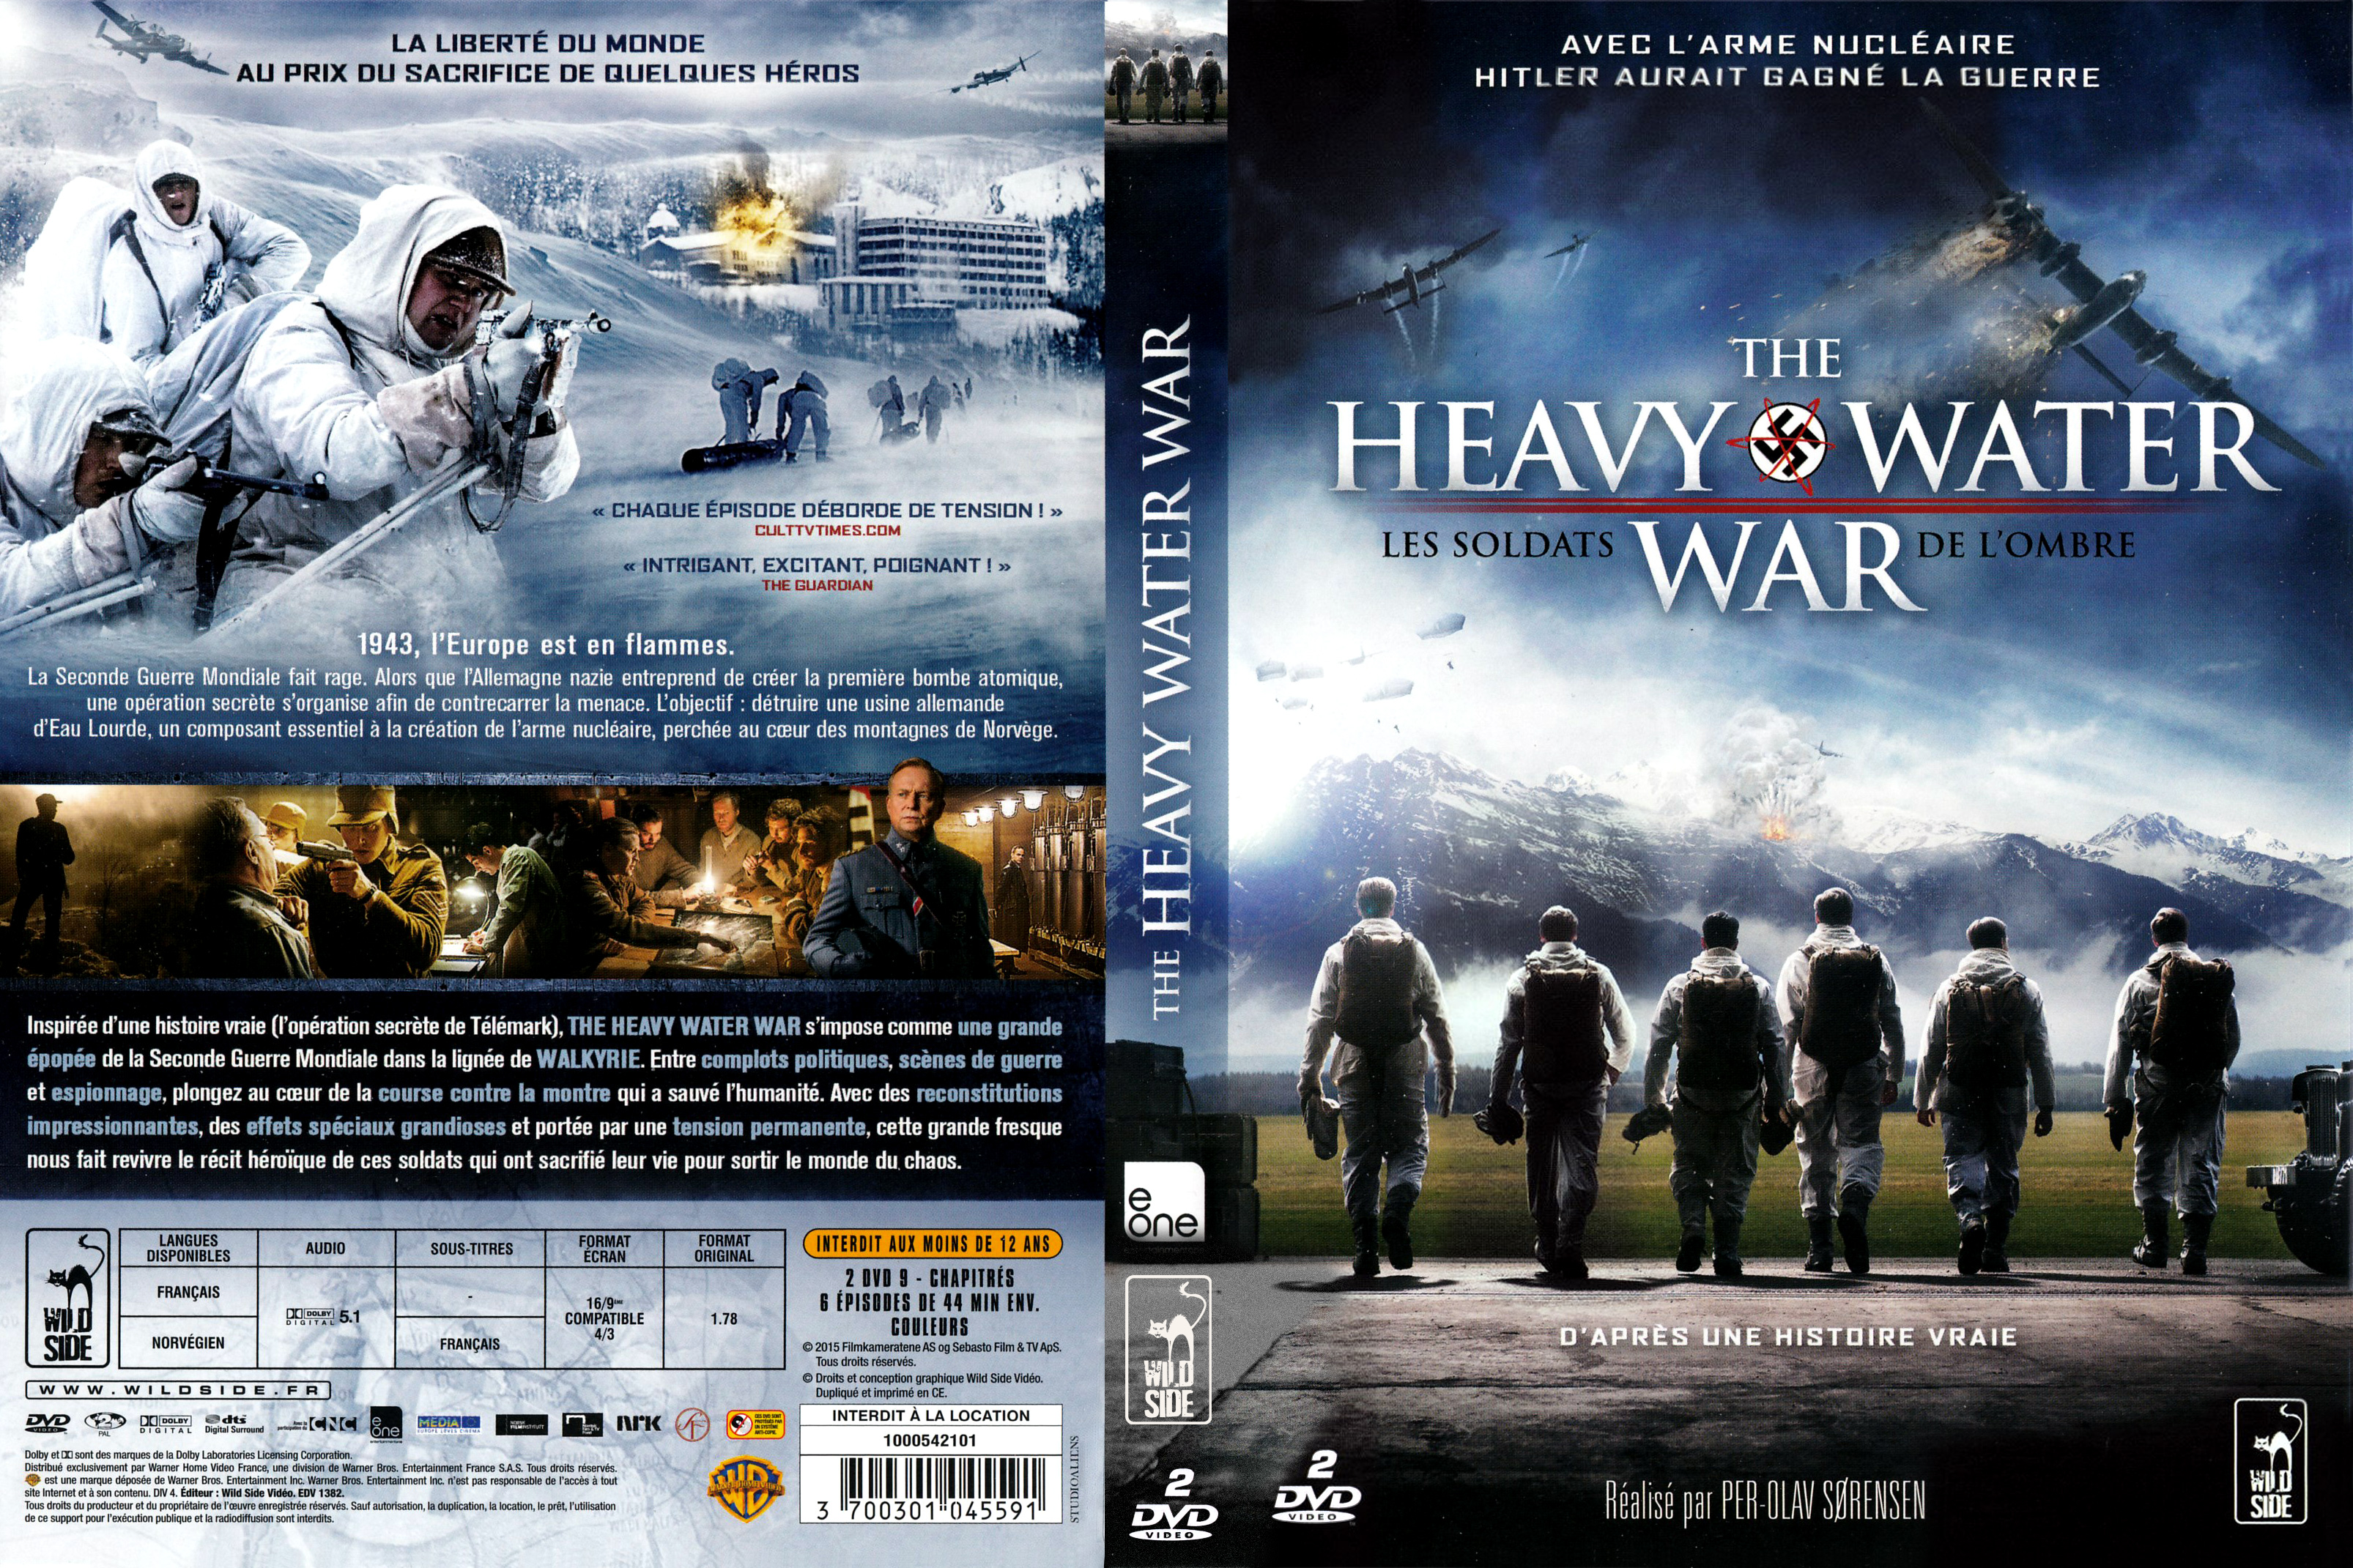 Jaquette DVD The heavy water war